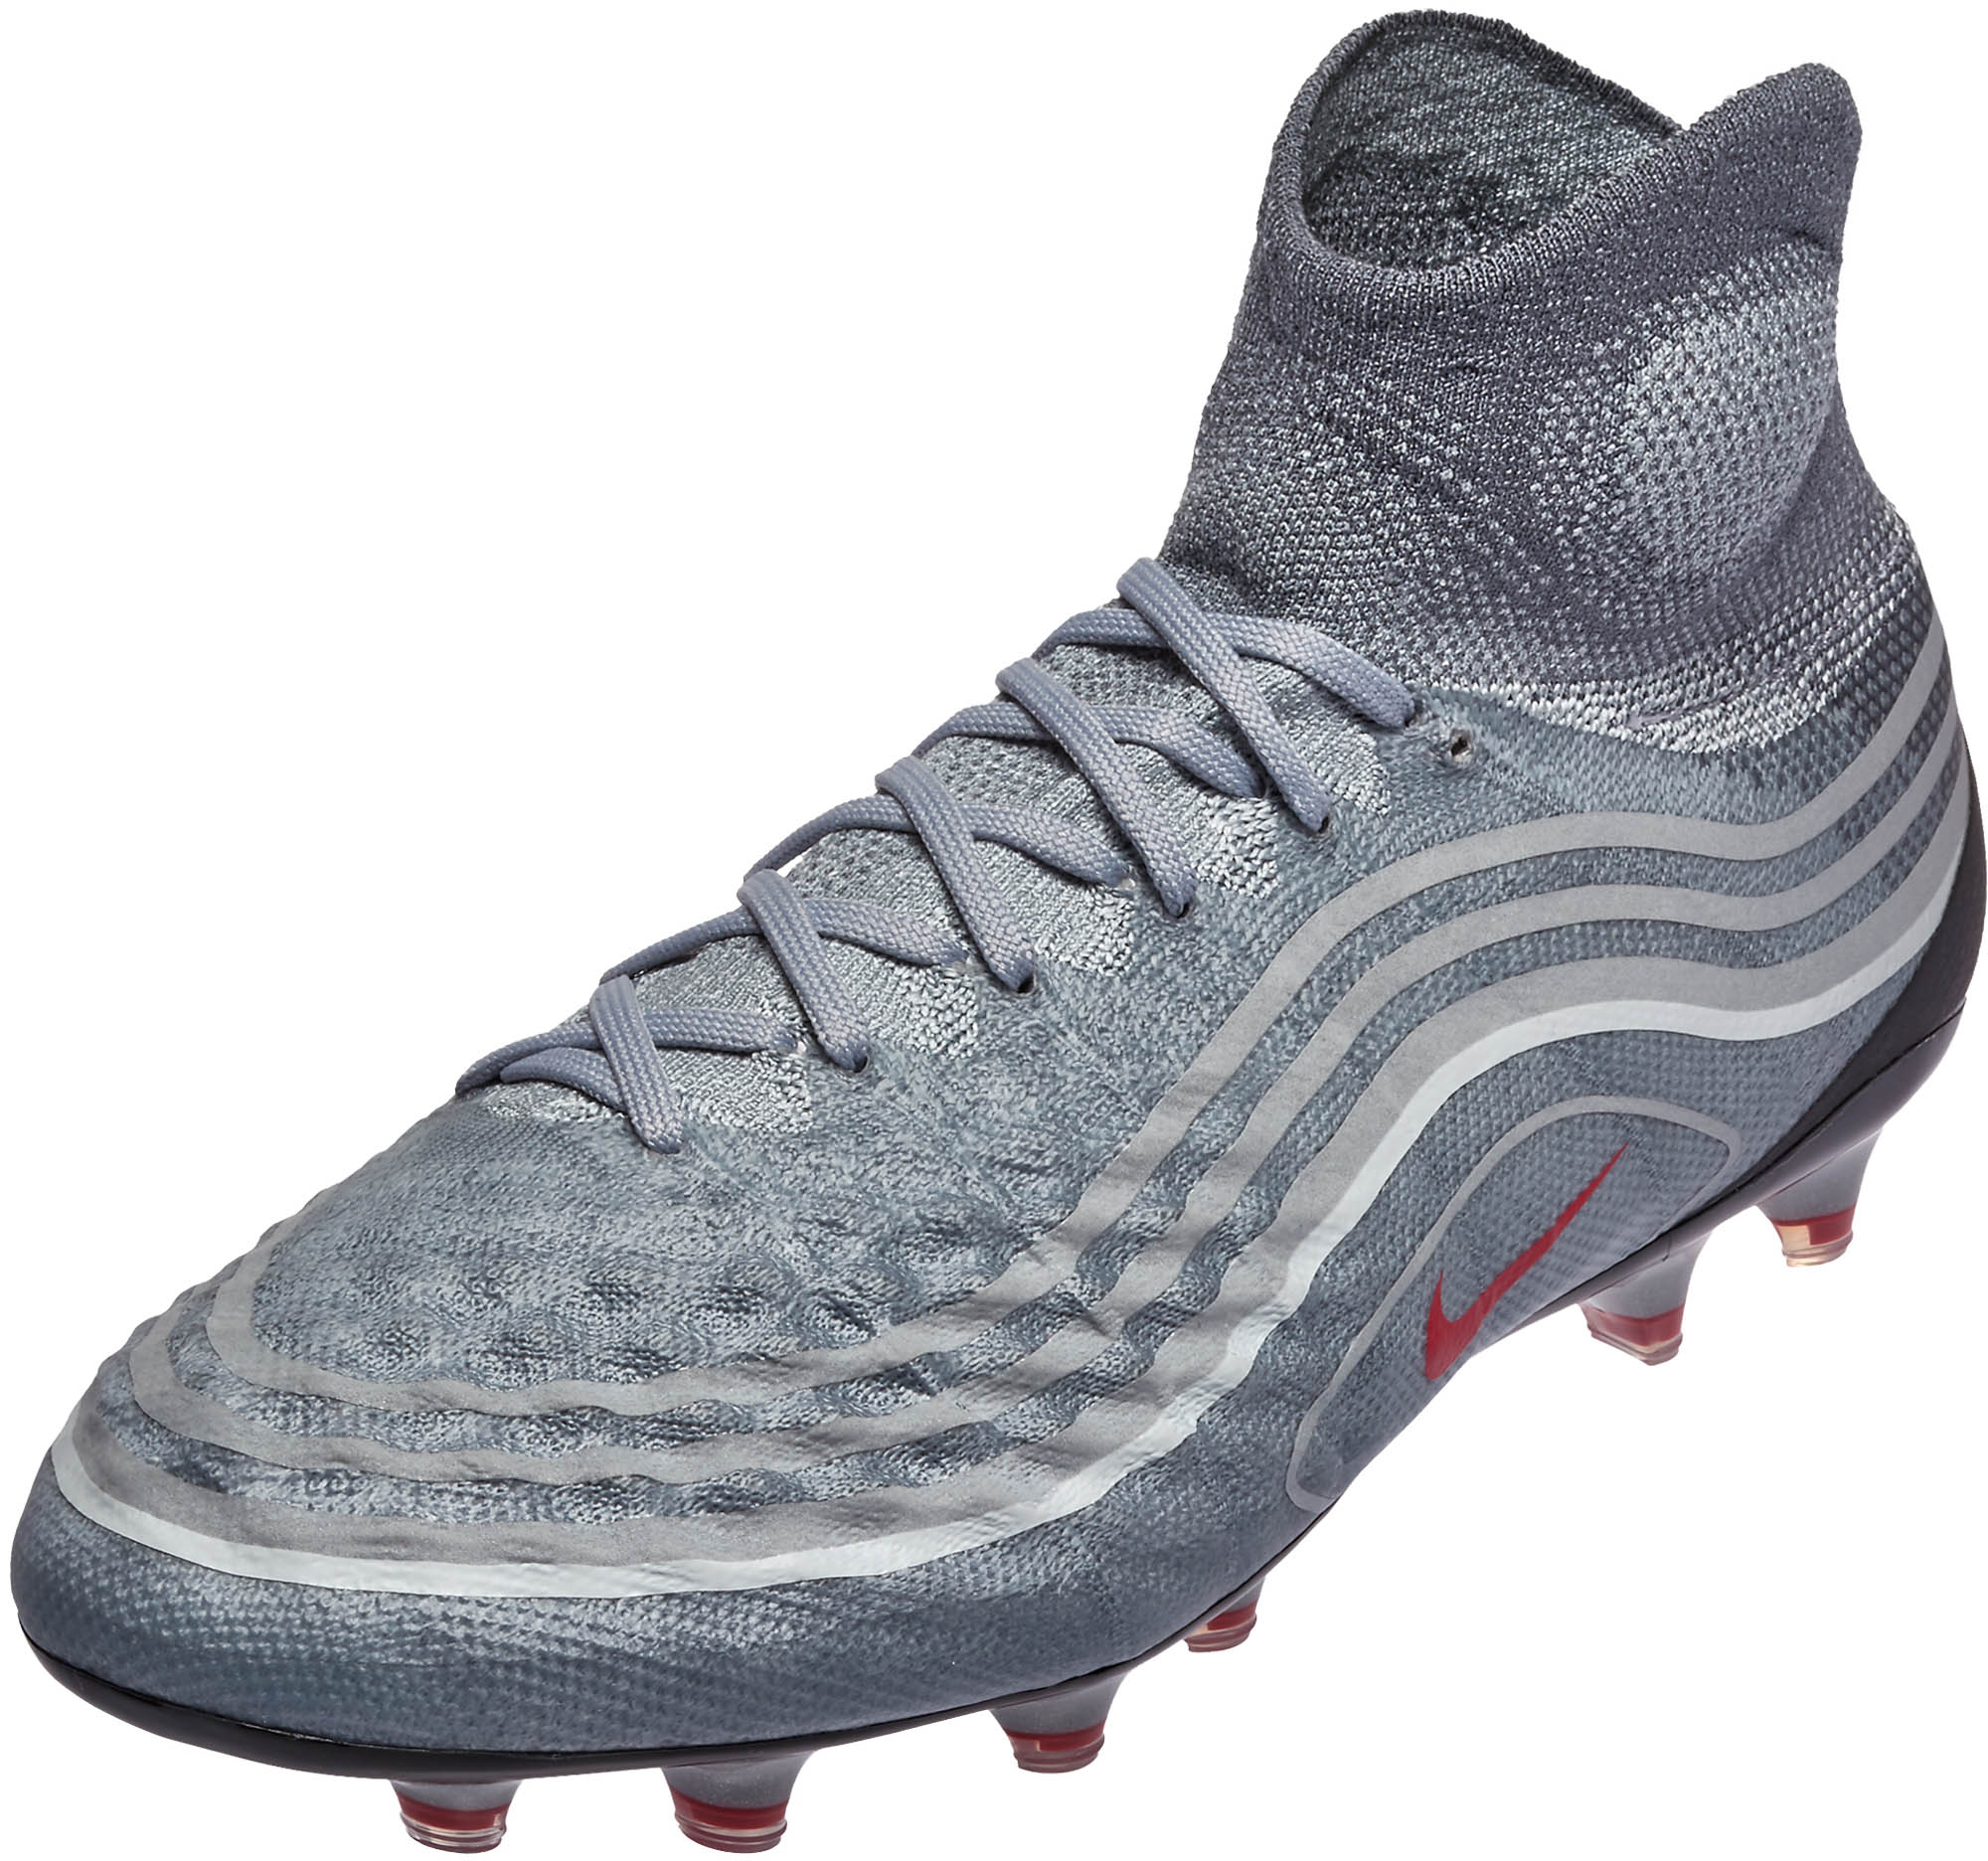 Nike Magista Obra II FG Soccer Cleats - SE - Cool Grey & Varsity Red -  Soccer Master